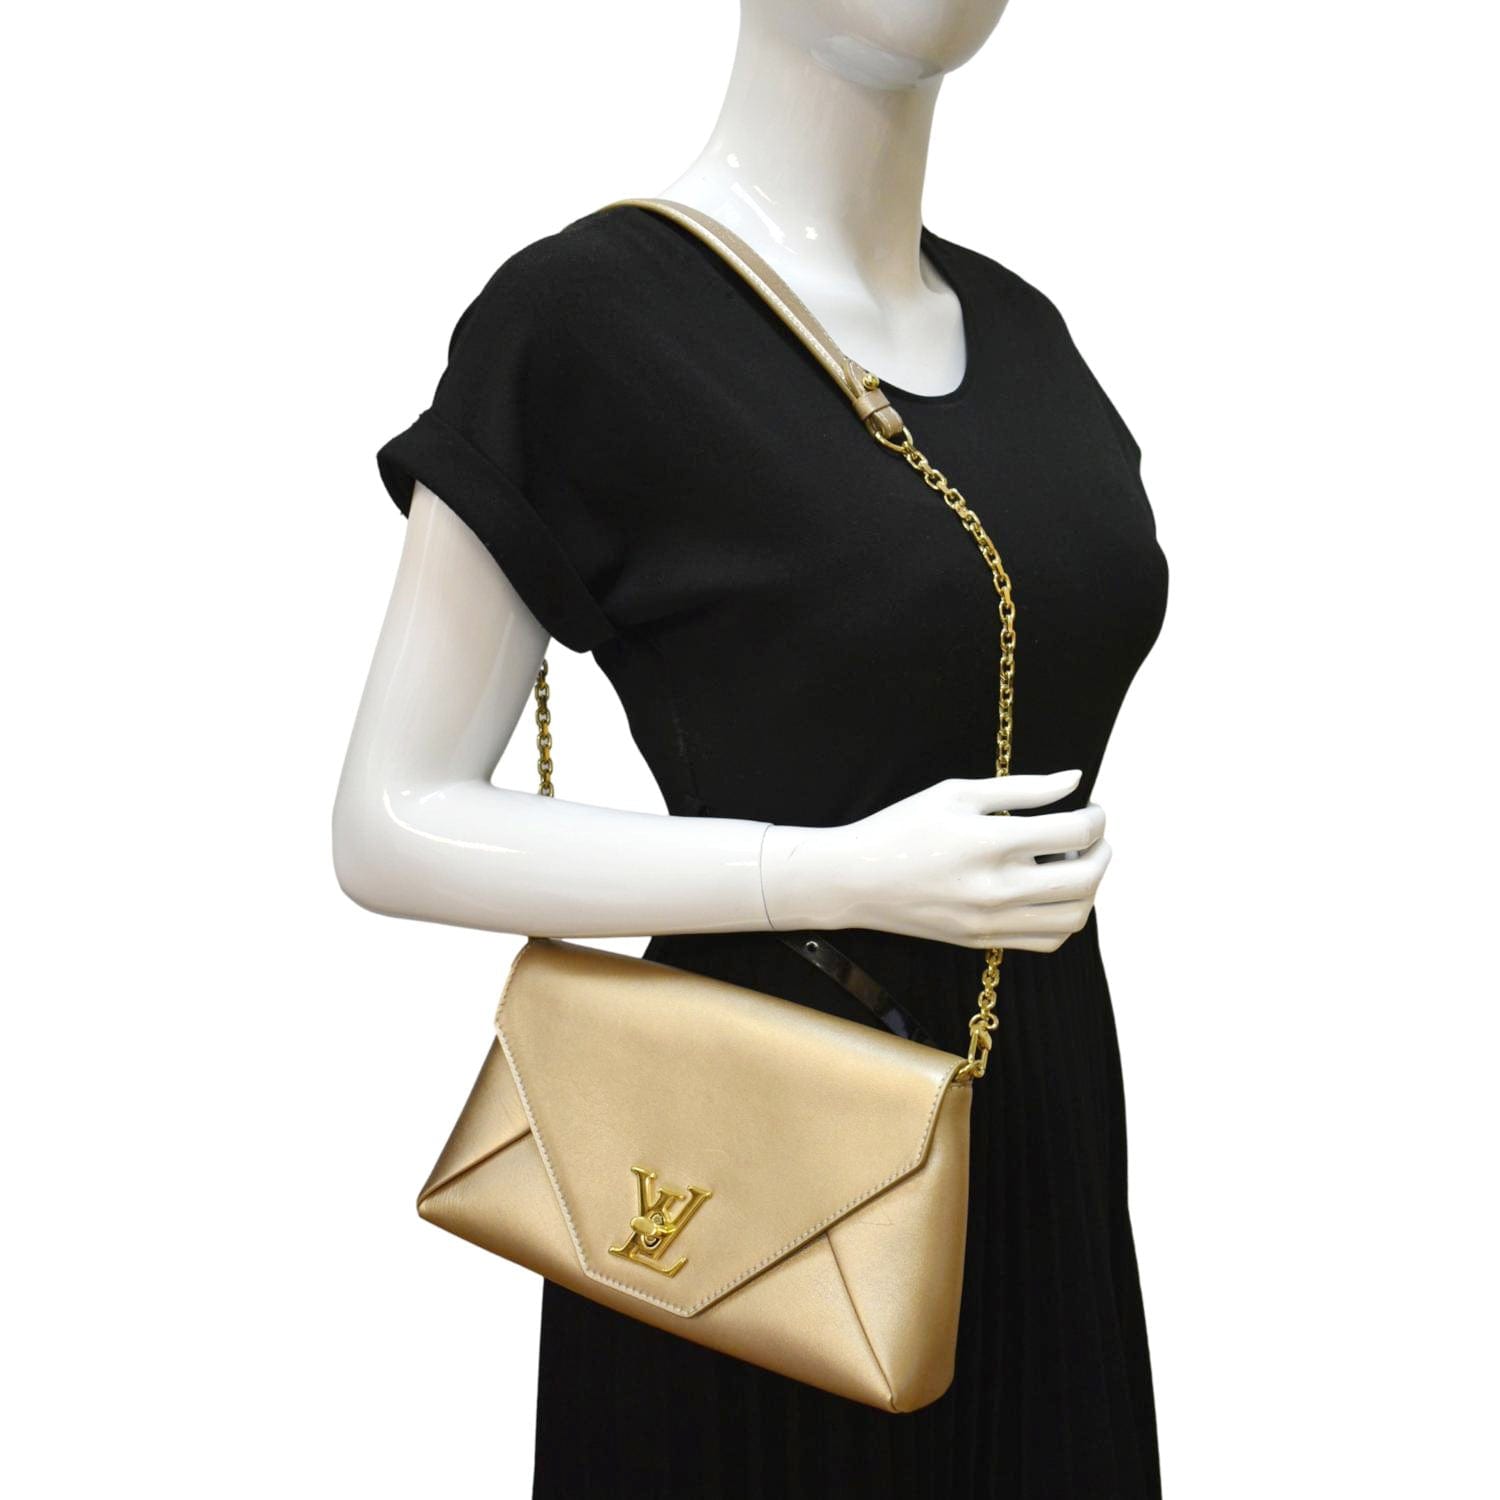 Louis vuitton Love note clutch shoulder handbag gold calfskin leather